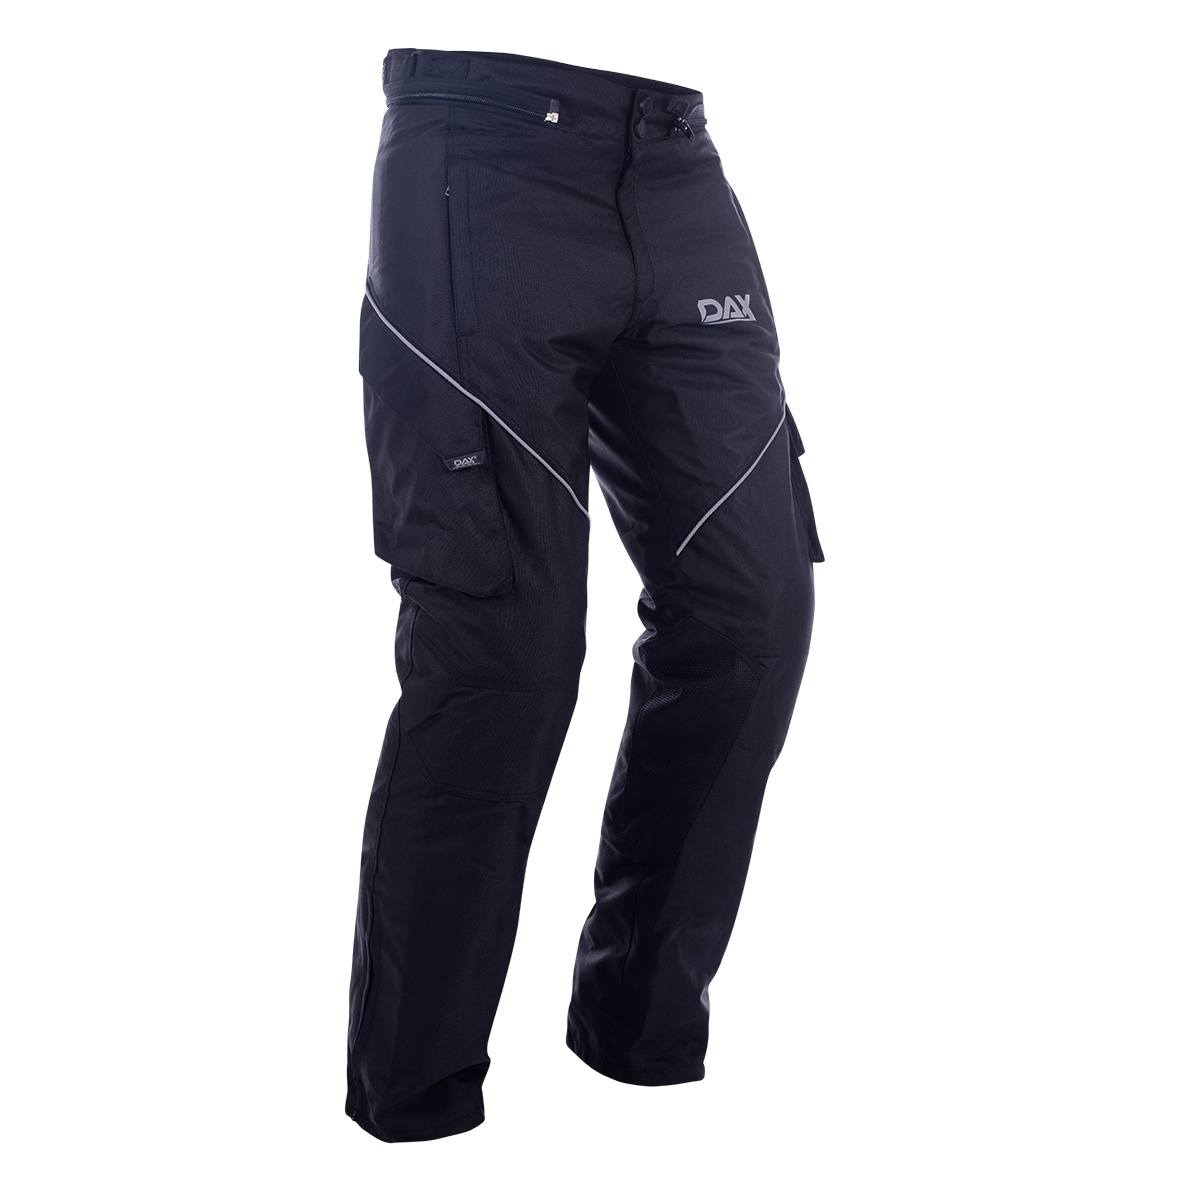 Obrázek produktu DAX ENDURO kalhoty, MaxDura/Dublan, s chrániči 2602-PNT-B